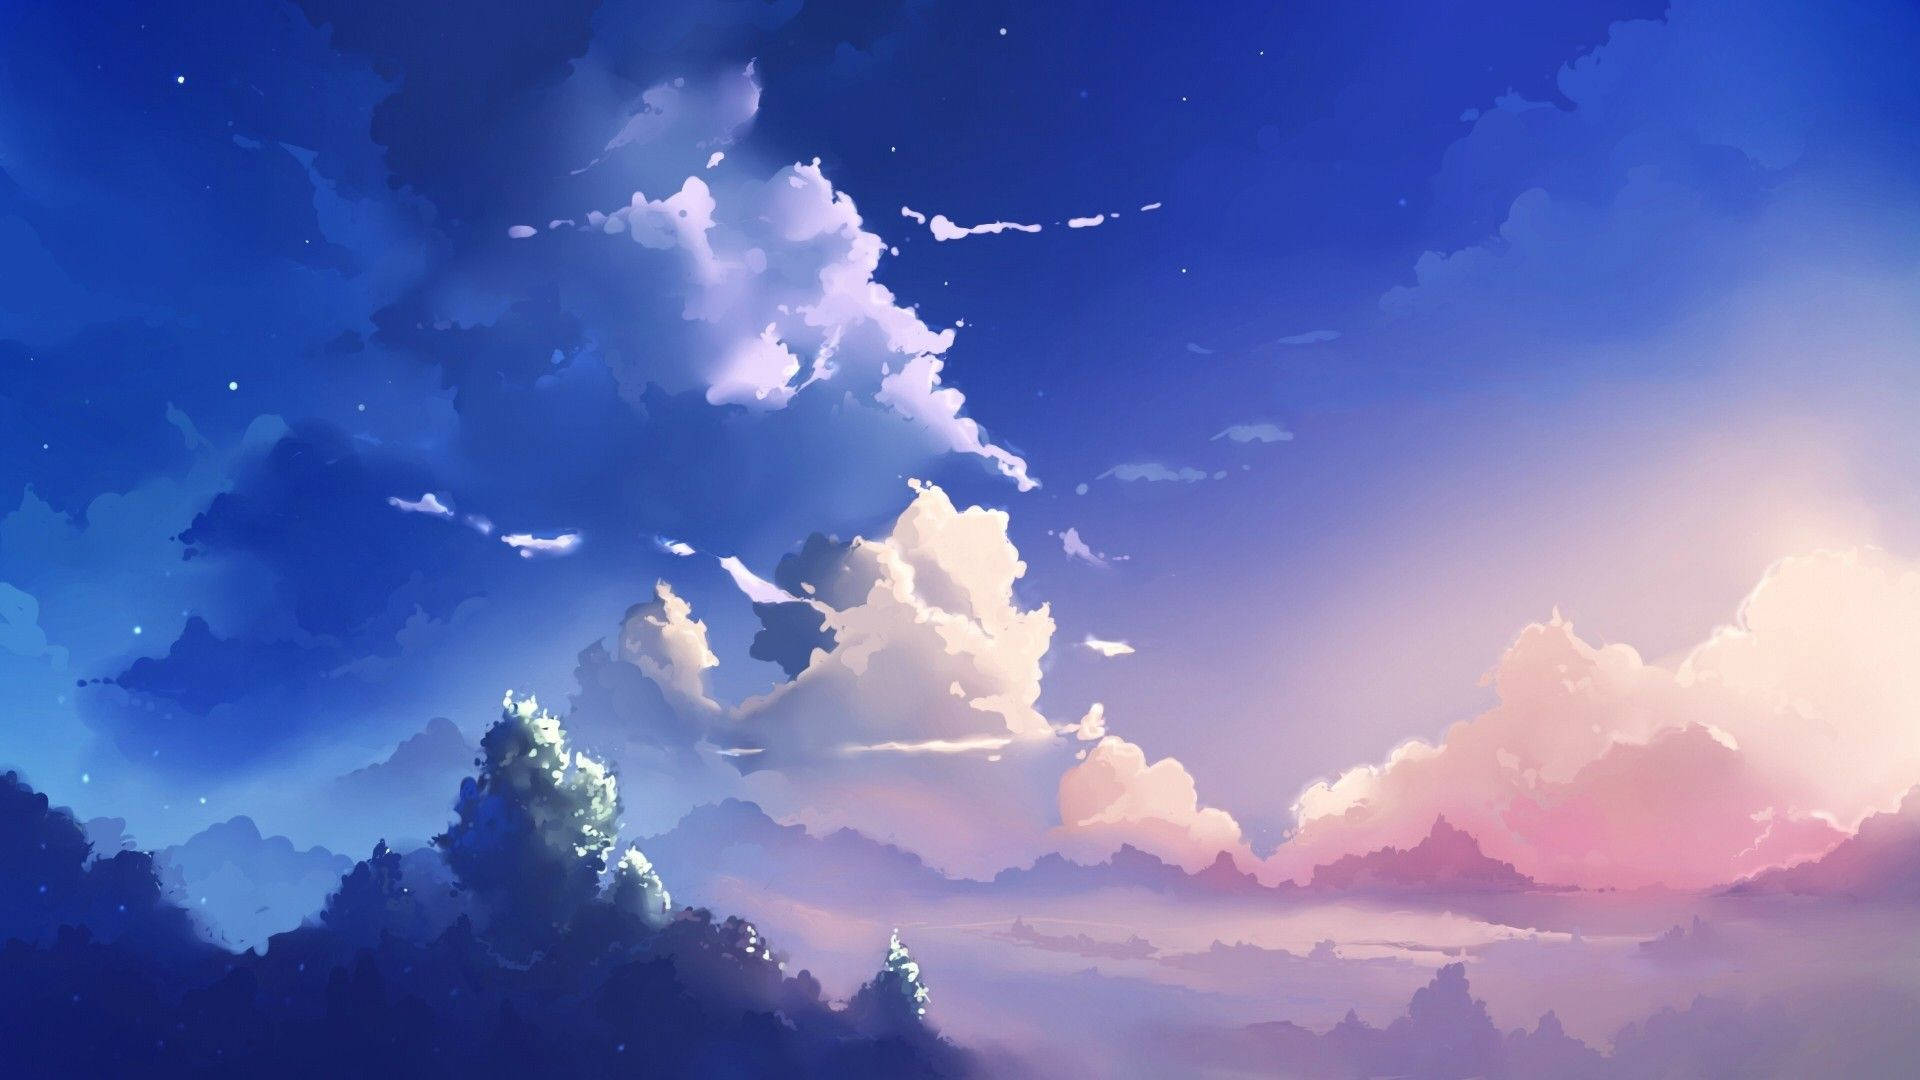 Anime Aesthetic Blue Skies Background